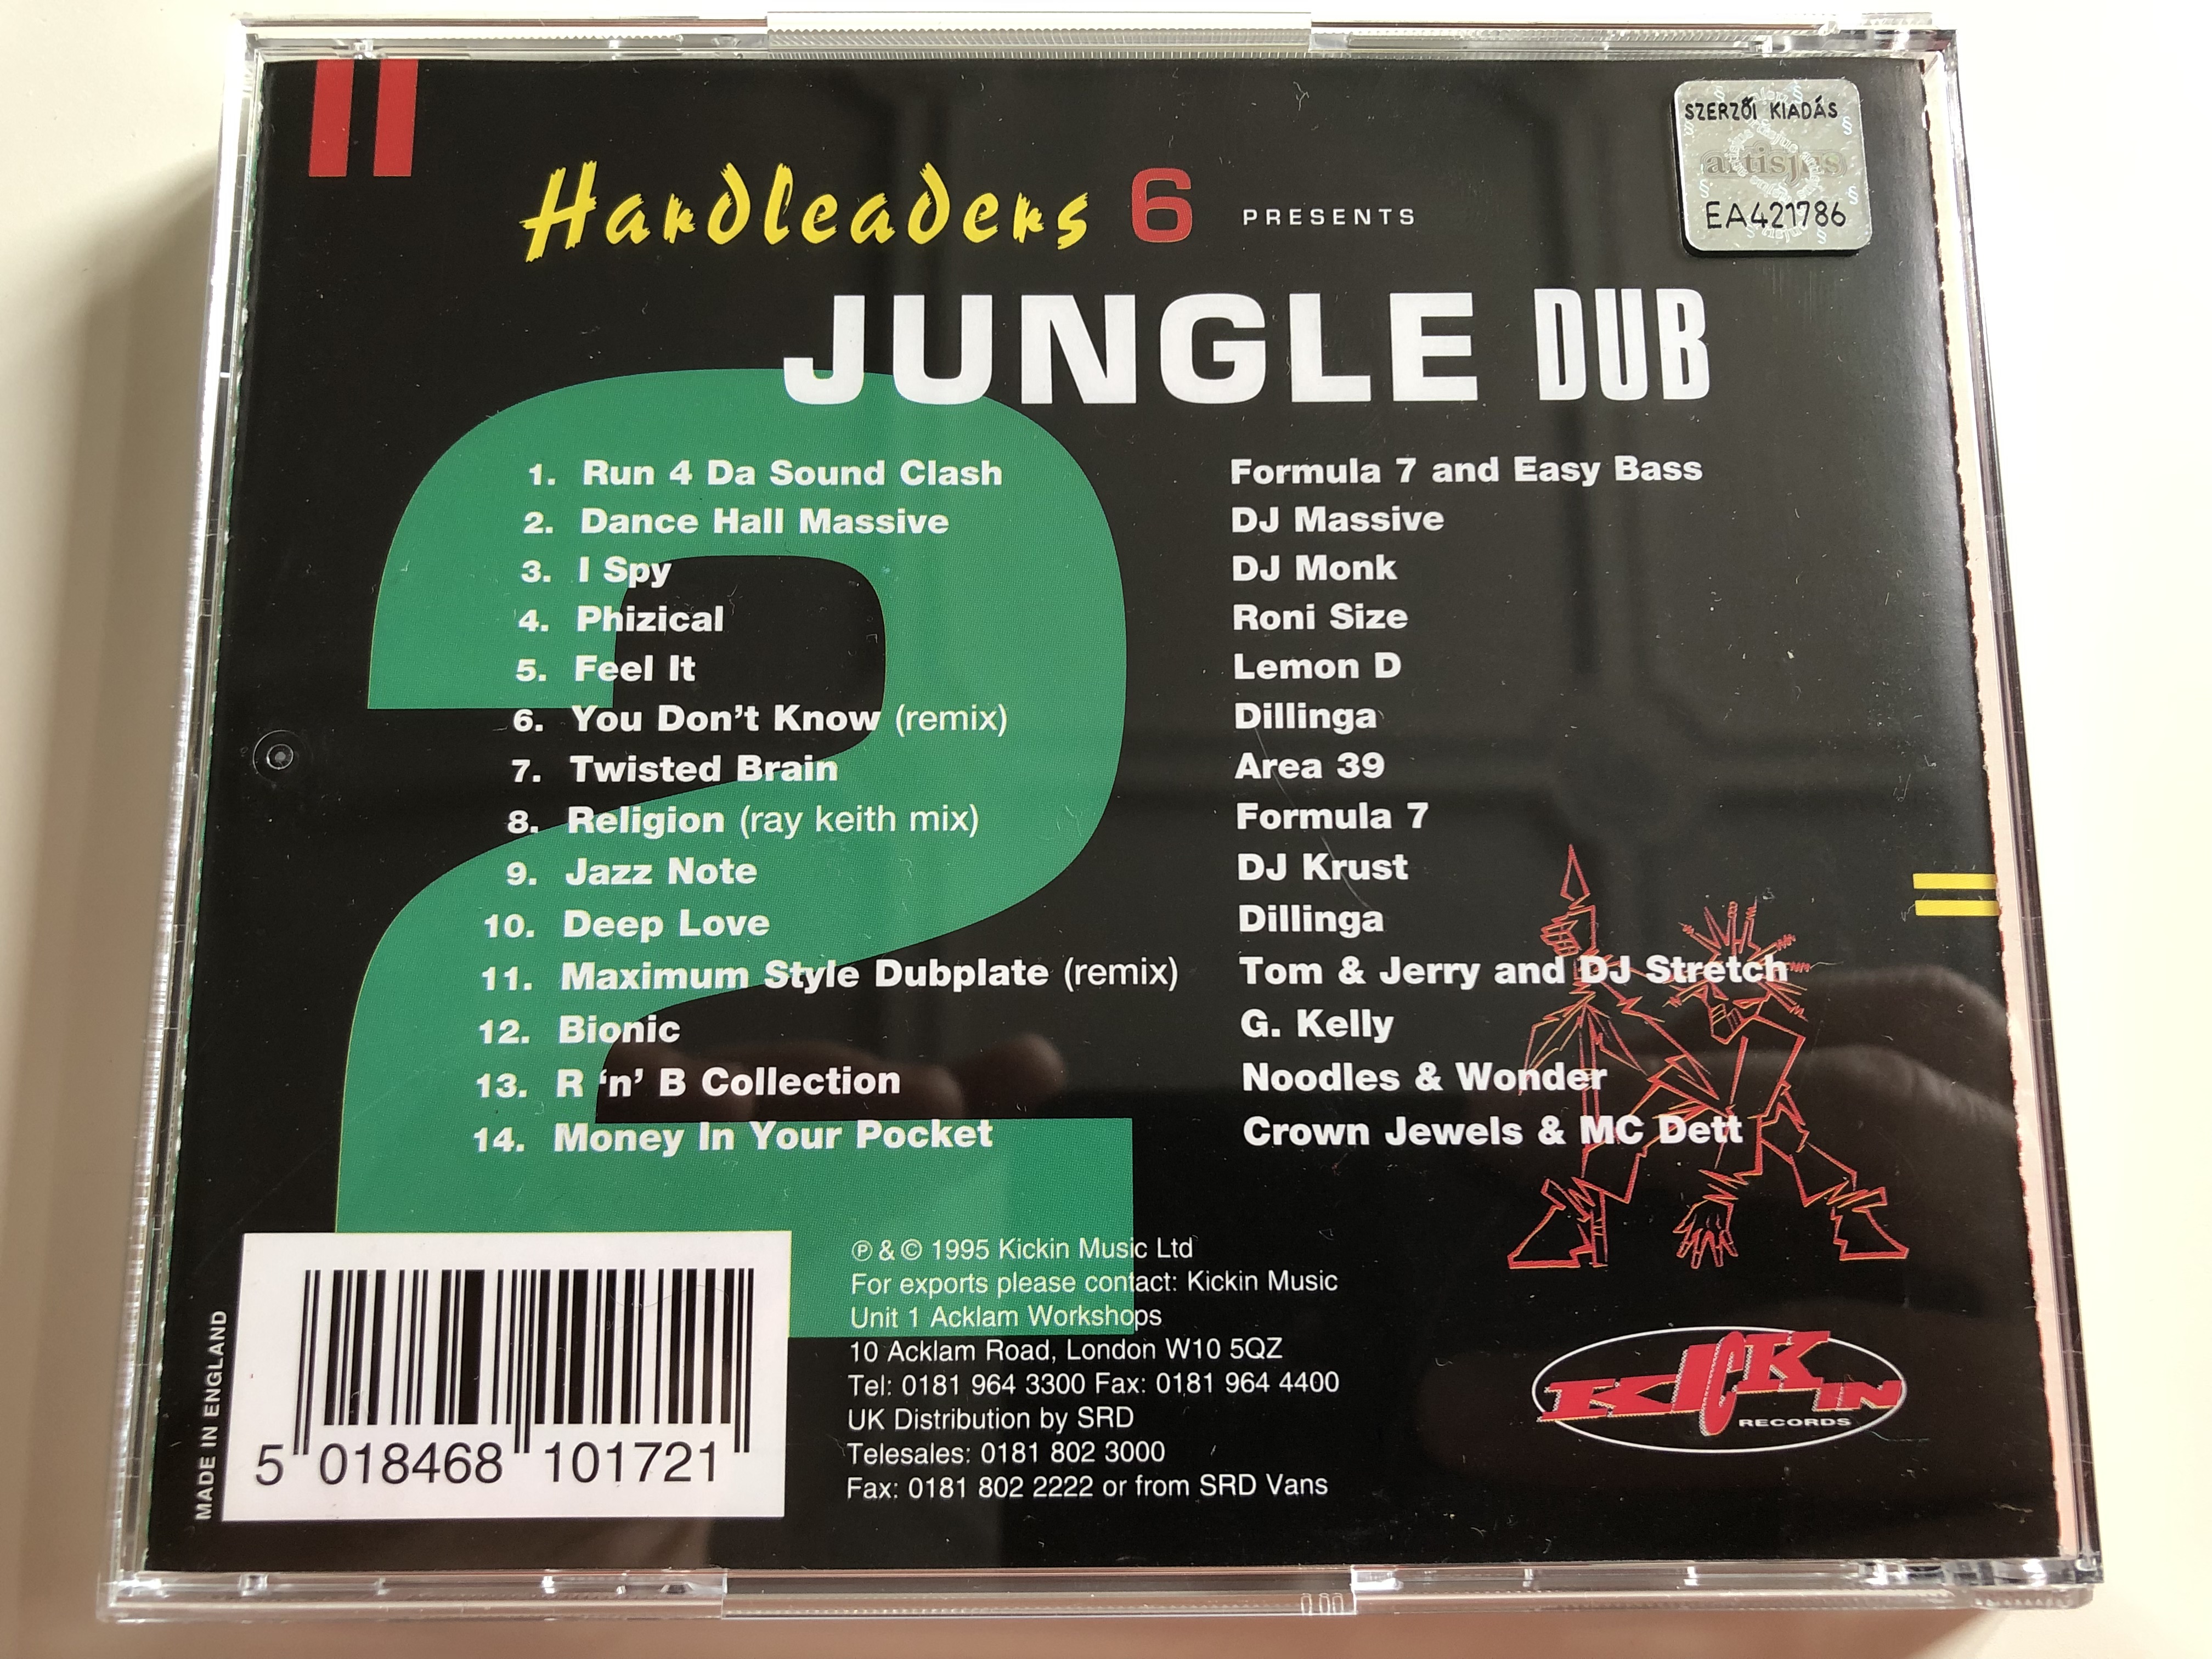 hardleaders-6-presents-jungle-dub-2-kickin-records-audio-cd-1995-kickcd17-6-.jpg